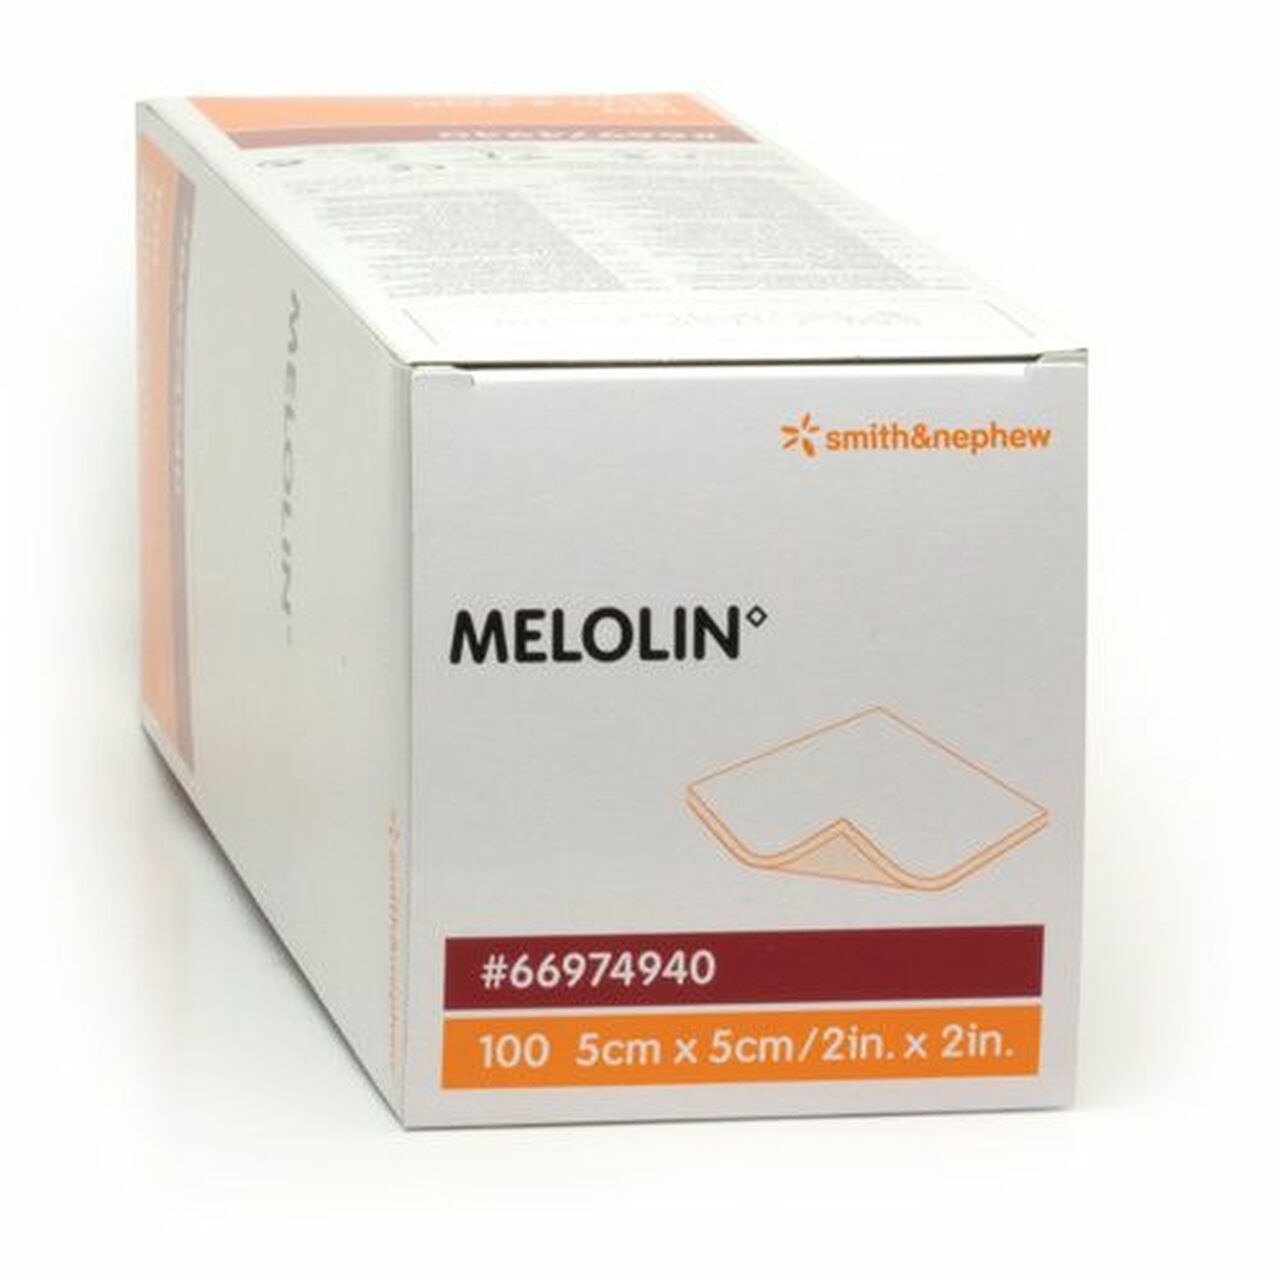 Melolin - Size - 5cm x 5cm